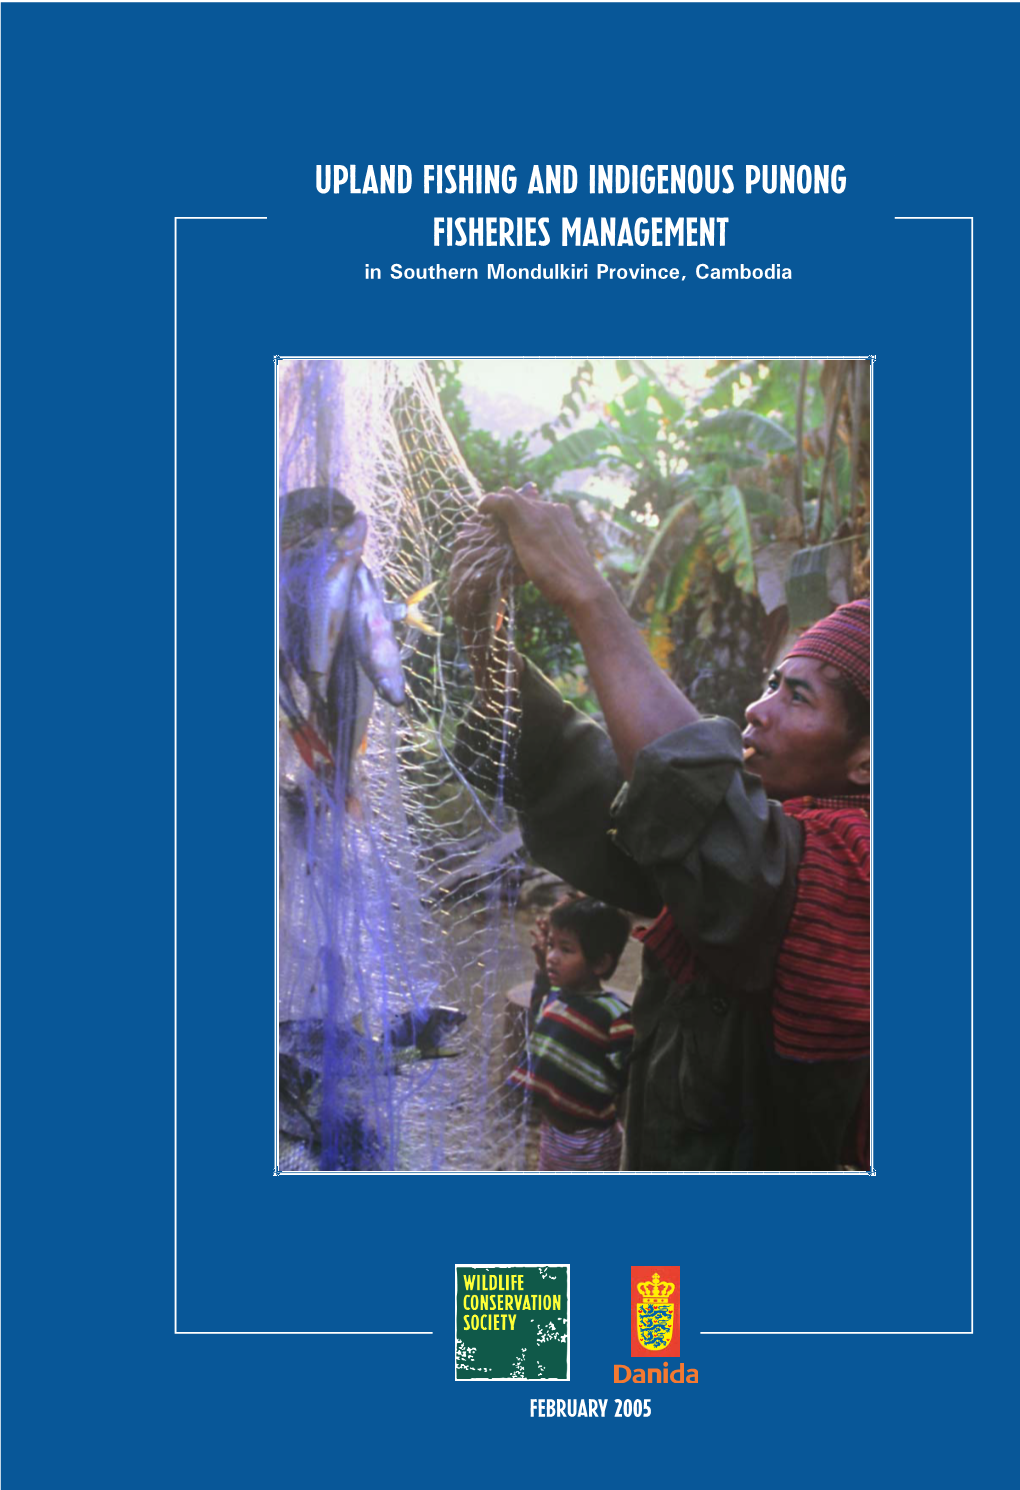 Upland Fishing and Indigenous Punong Fisheries Management in Southern Mondulkiri Province, Cambodia